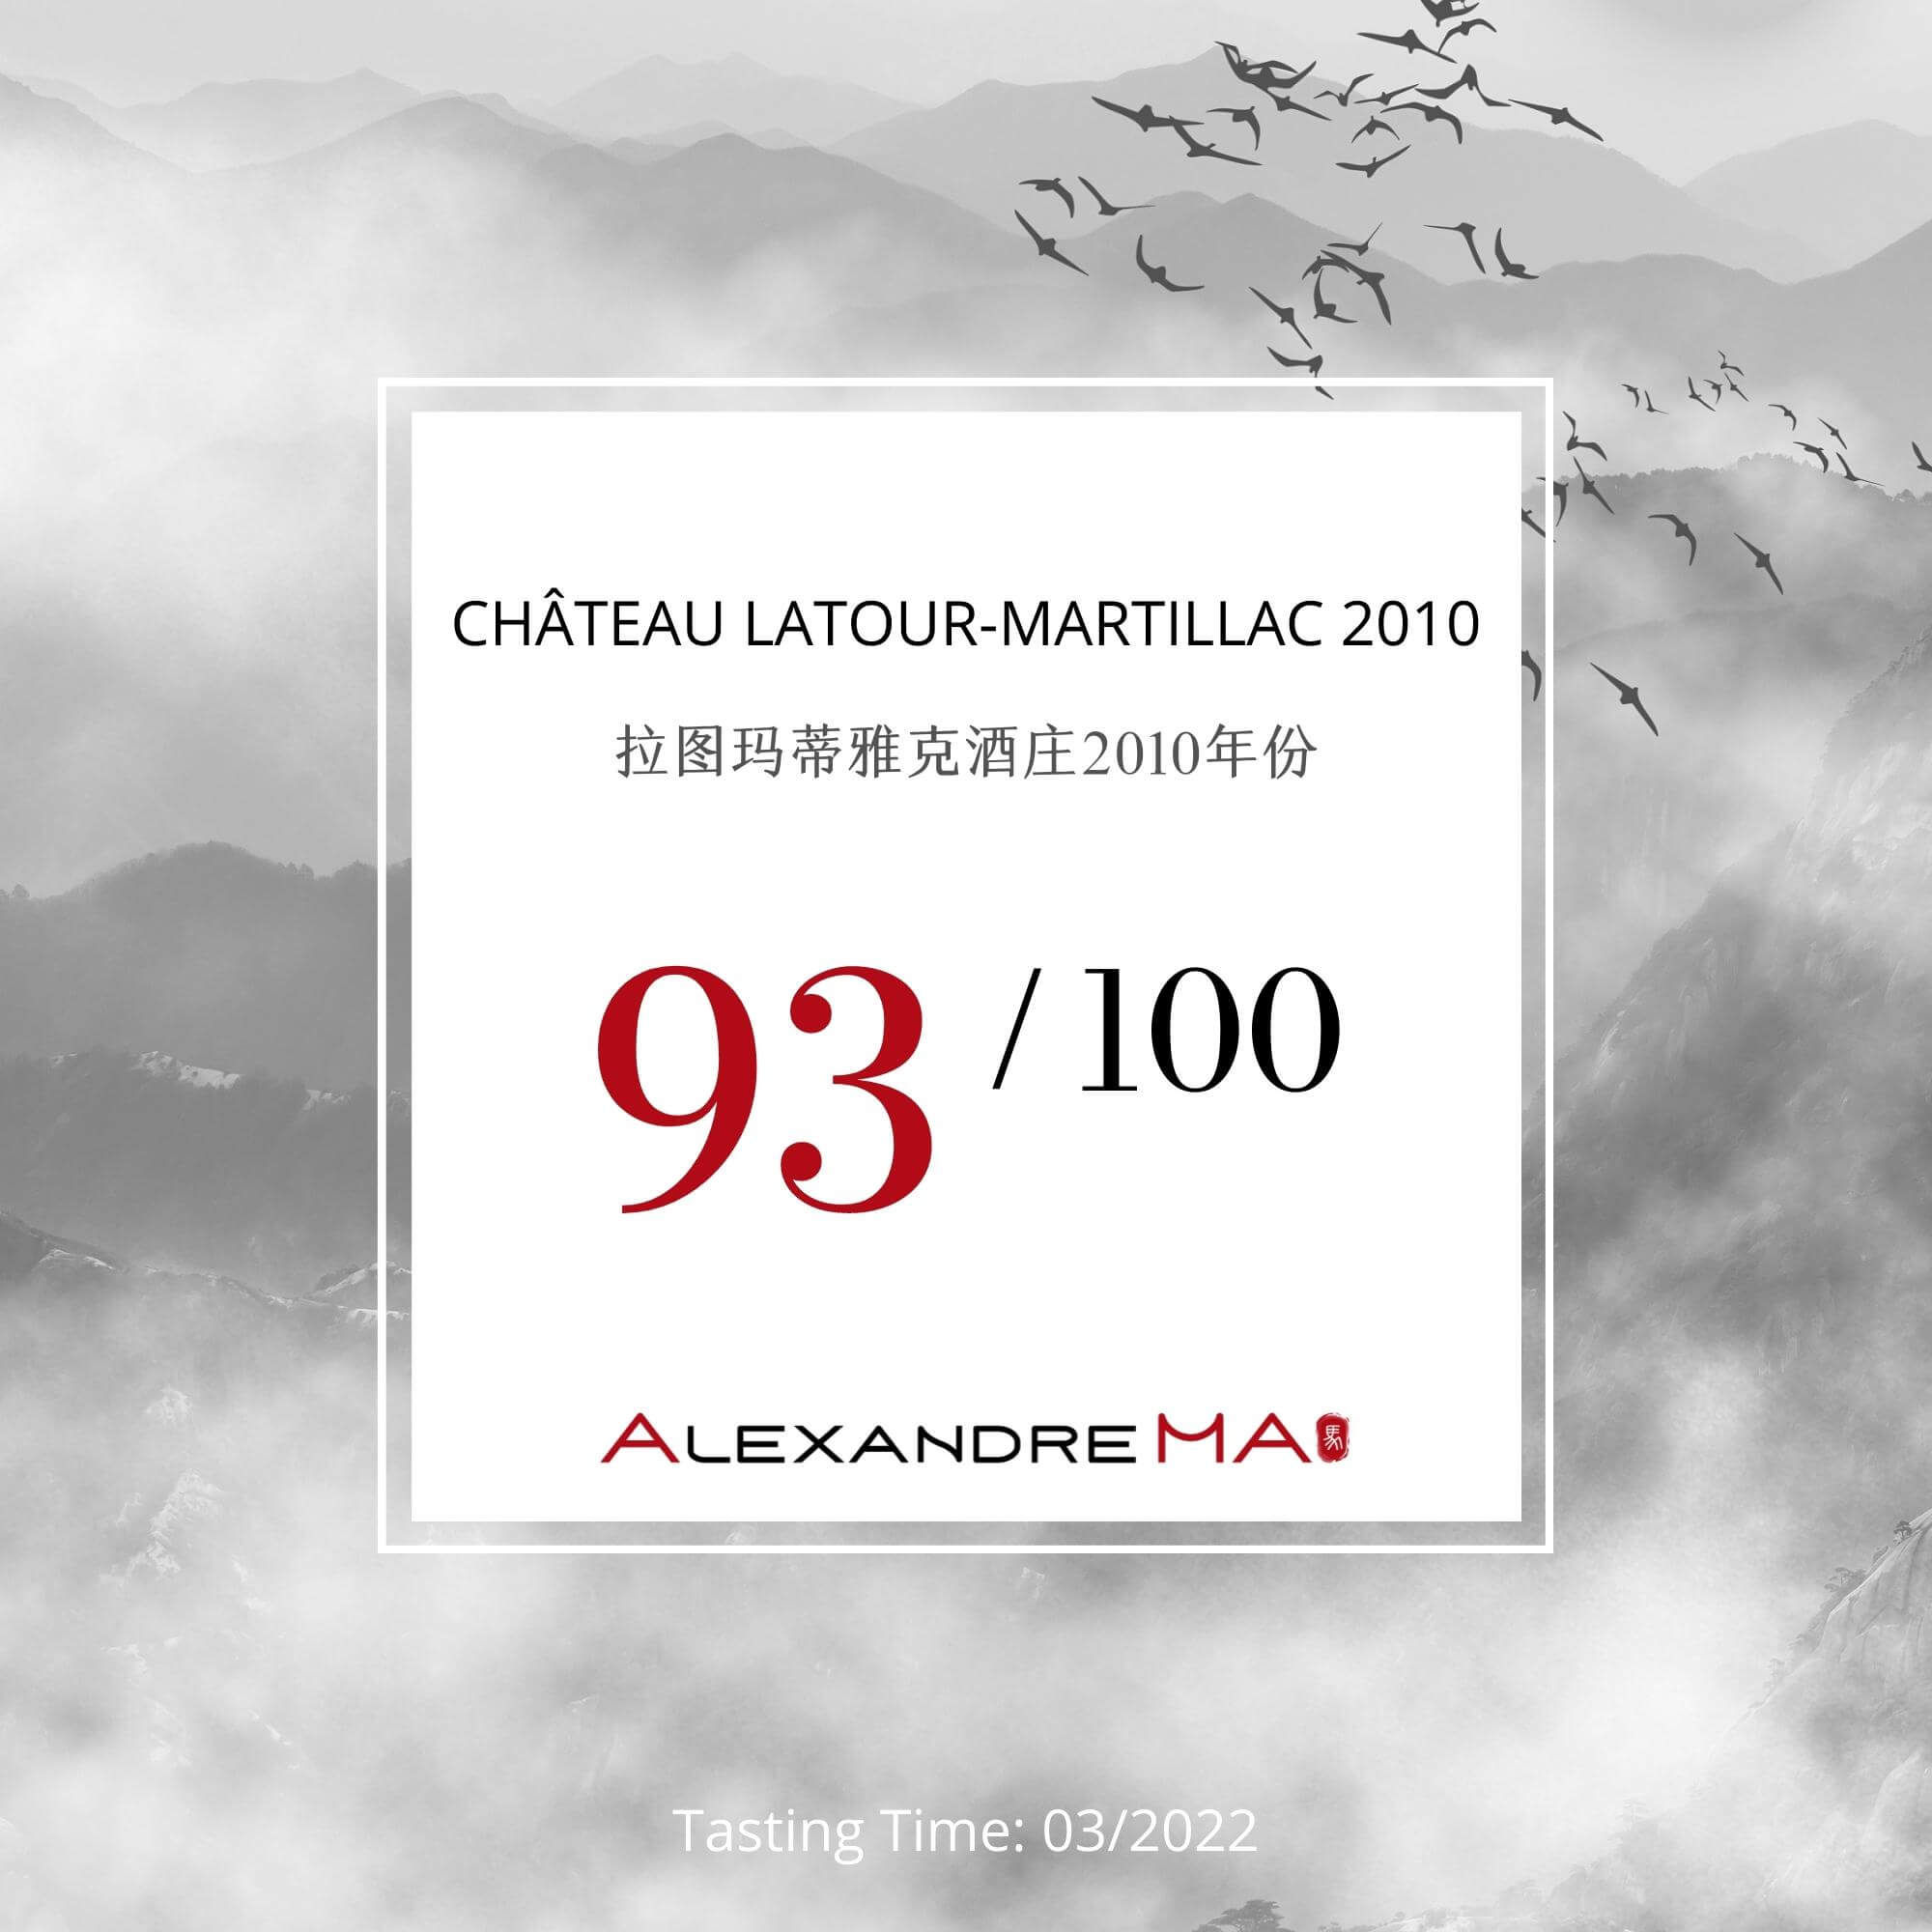 Château Latour-Martillac 拉图玛蒂雅克酒庄 2010 - Alexandre Ma